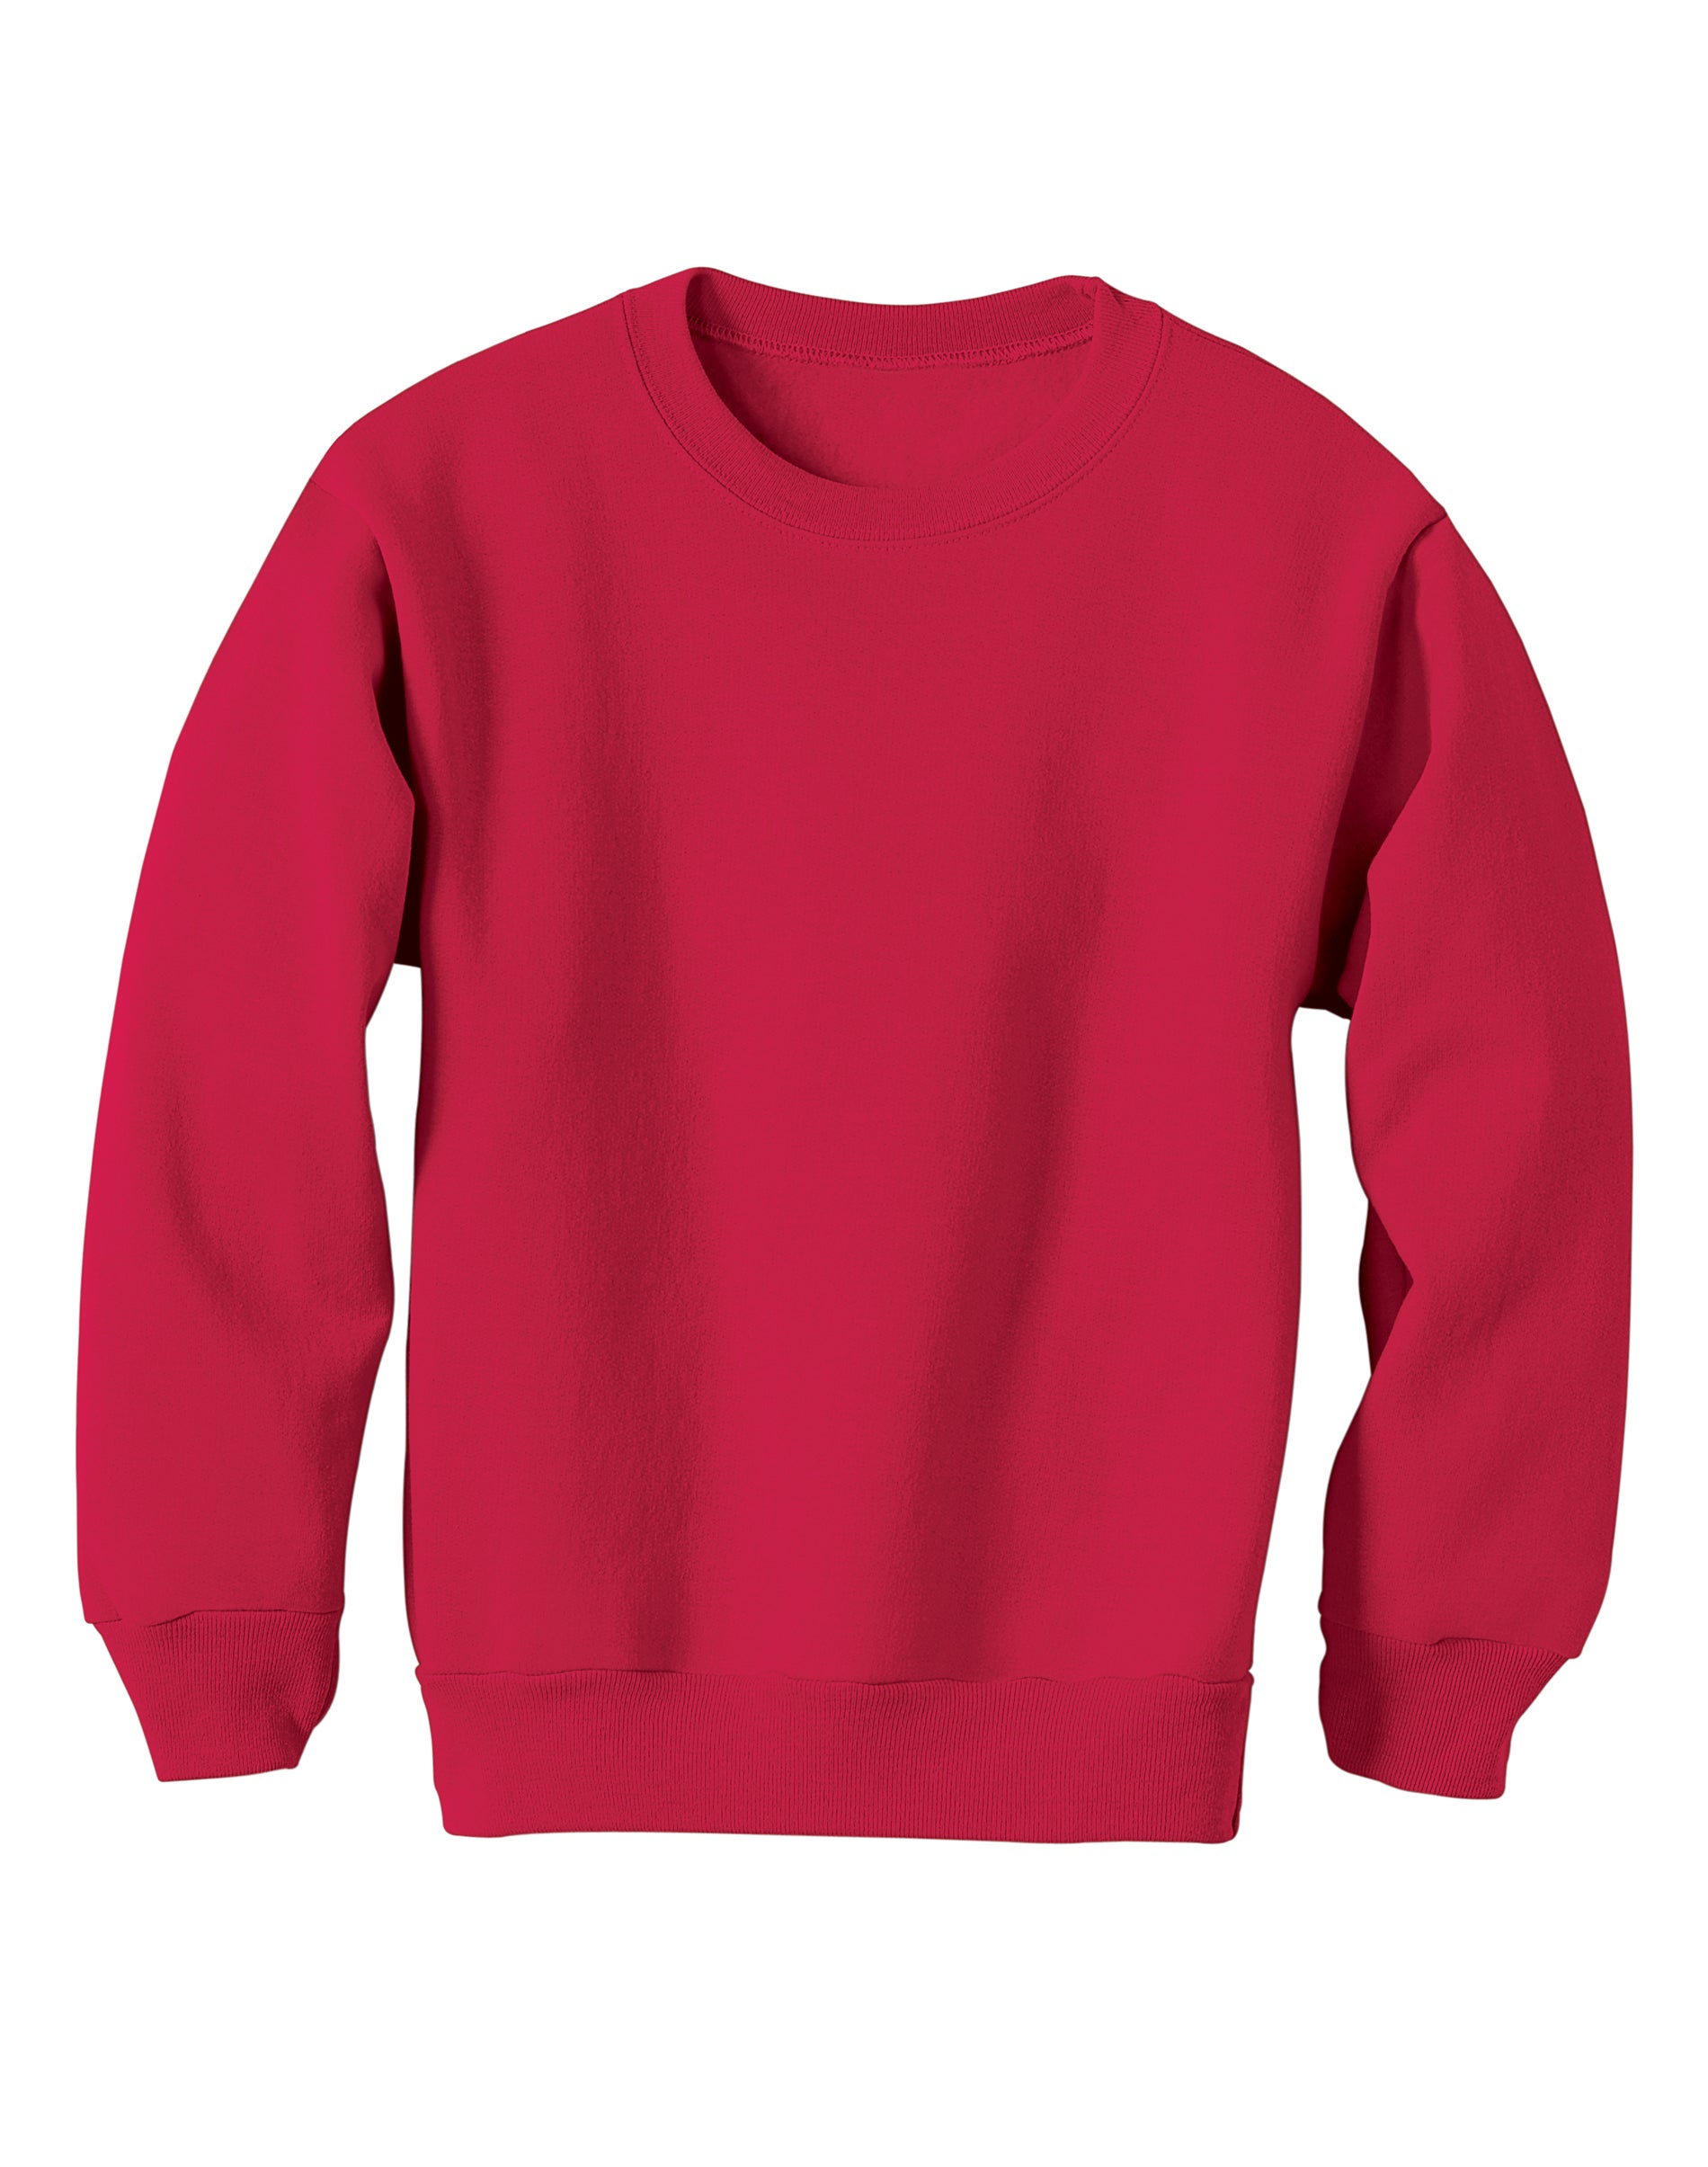 Hanes EcoSmart Kids' Crewneck Sweatshirt Deep Red M - image 1 of 2